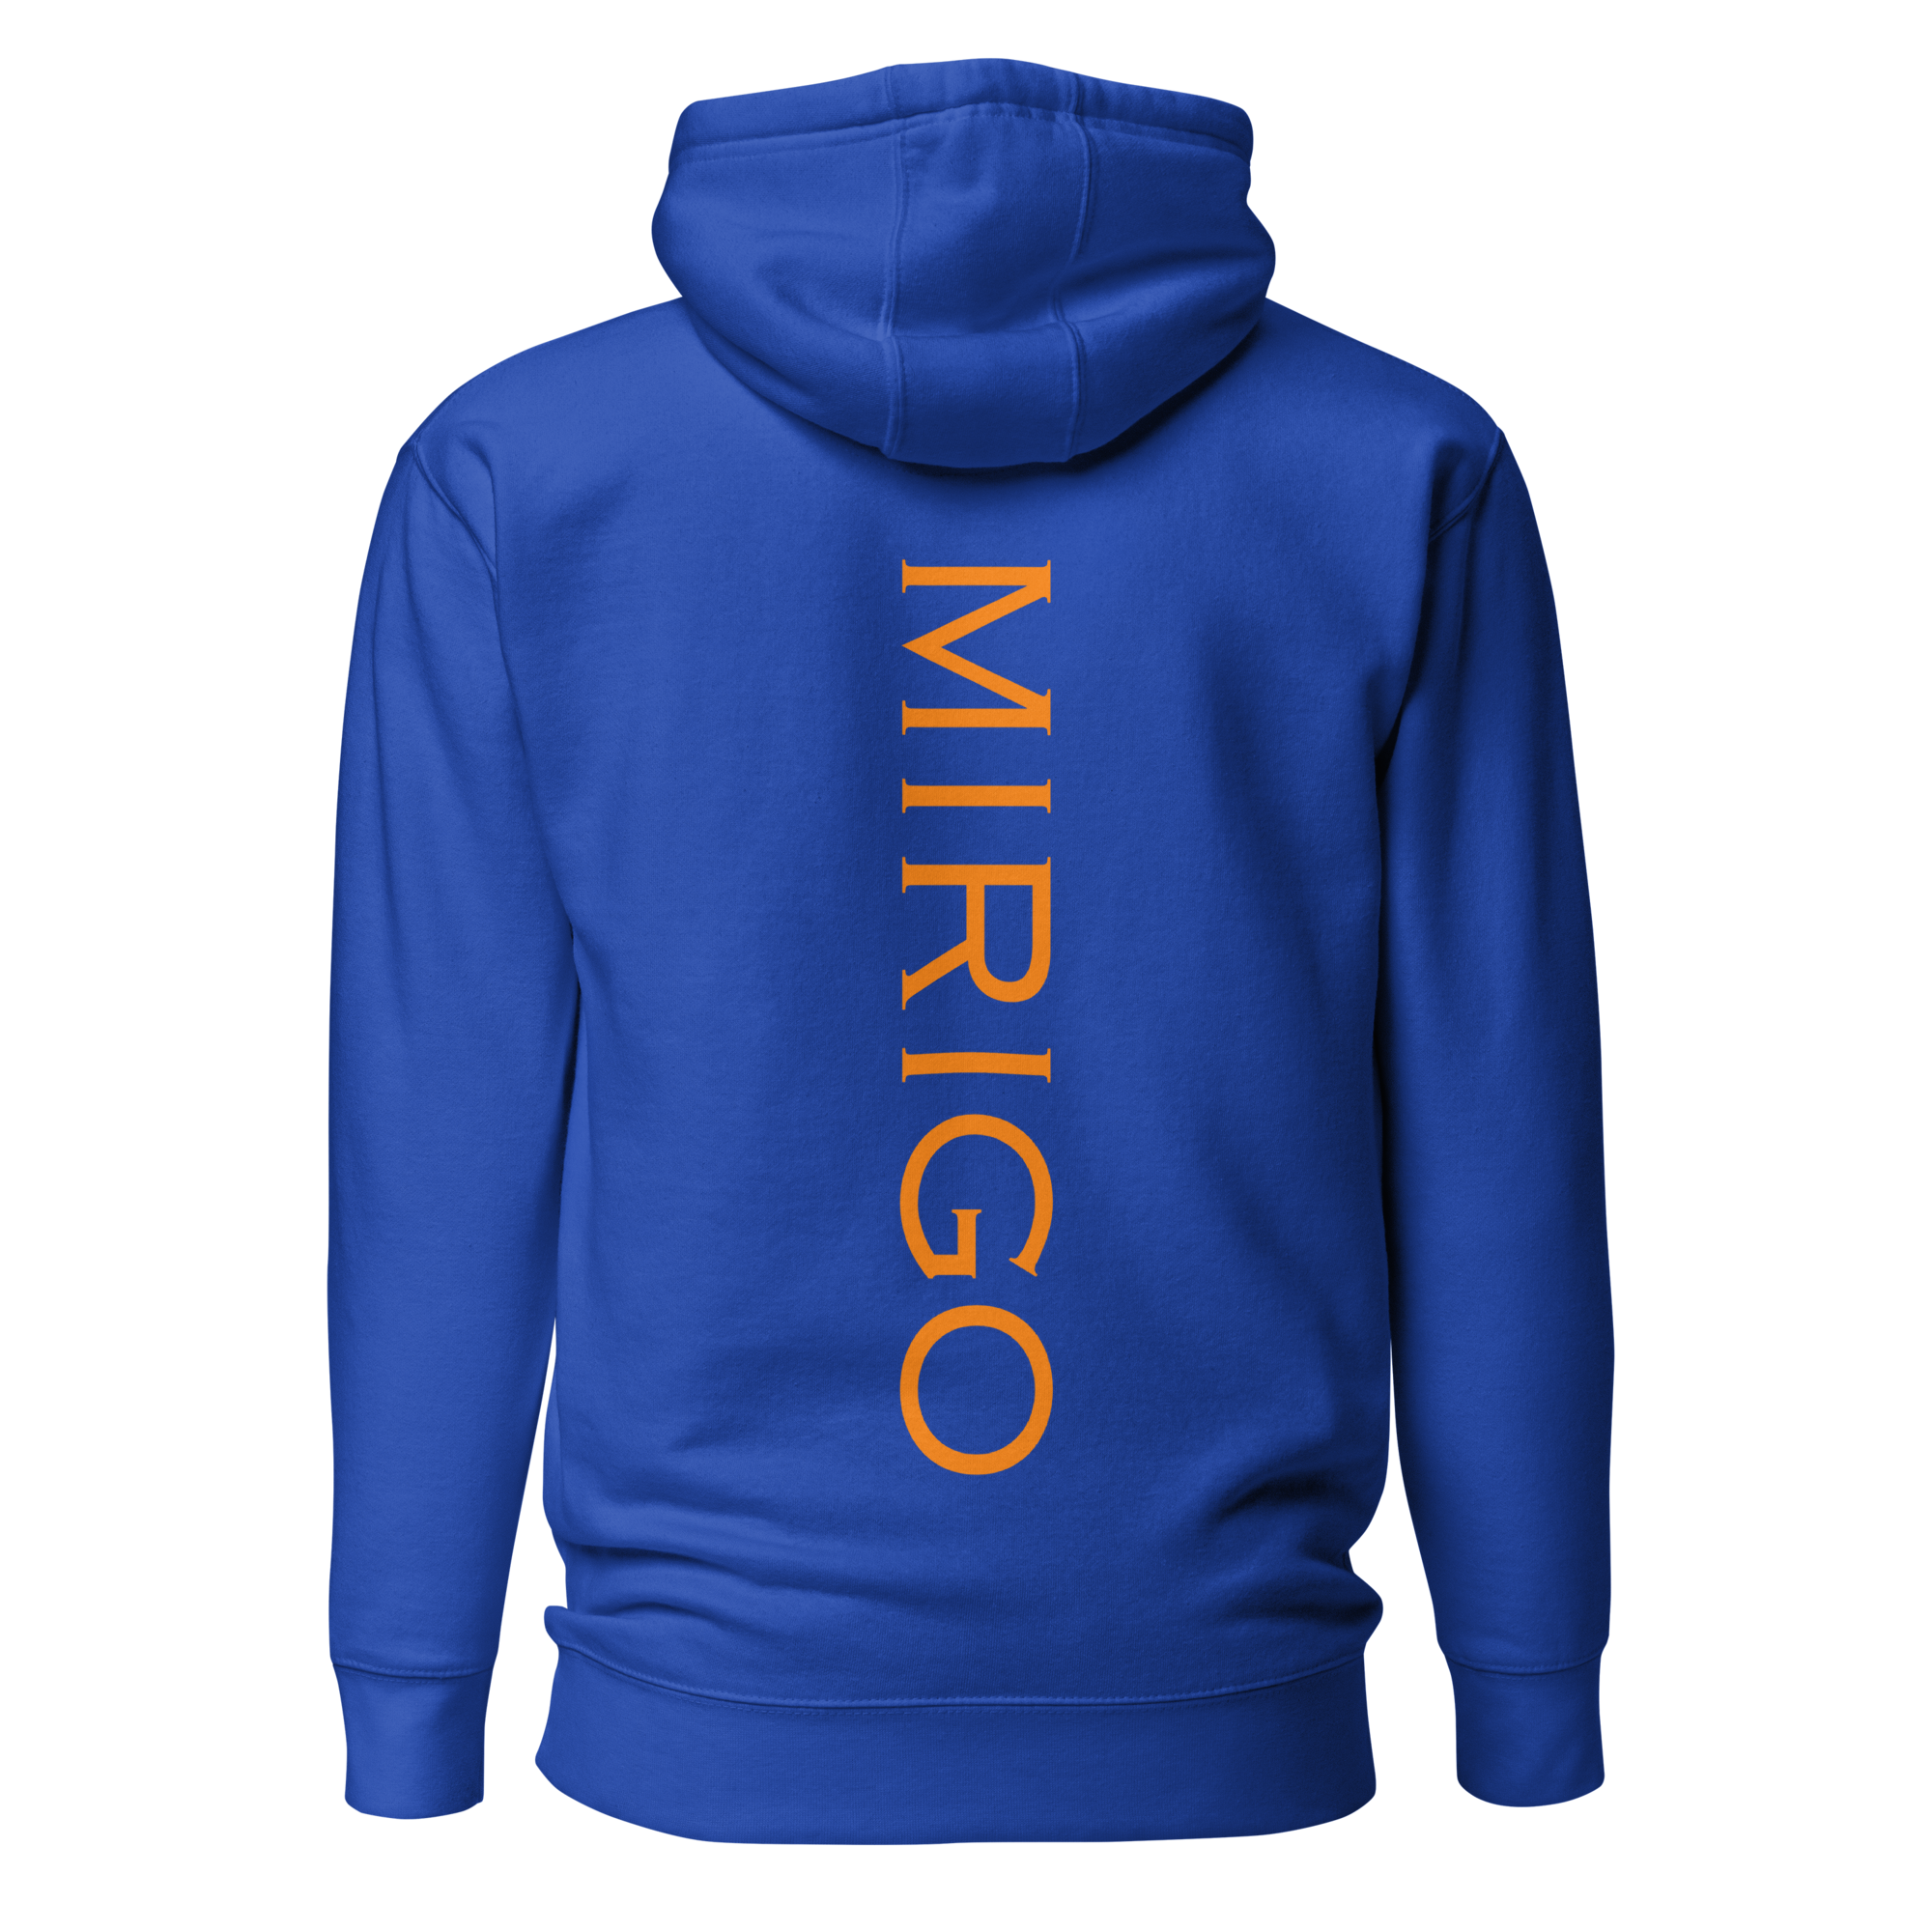 Men Hoodie - Mirigo blue/orange